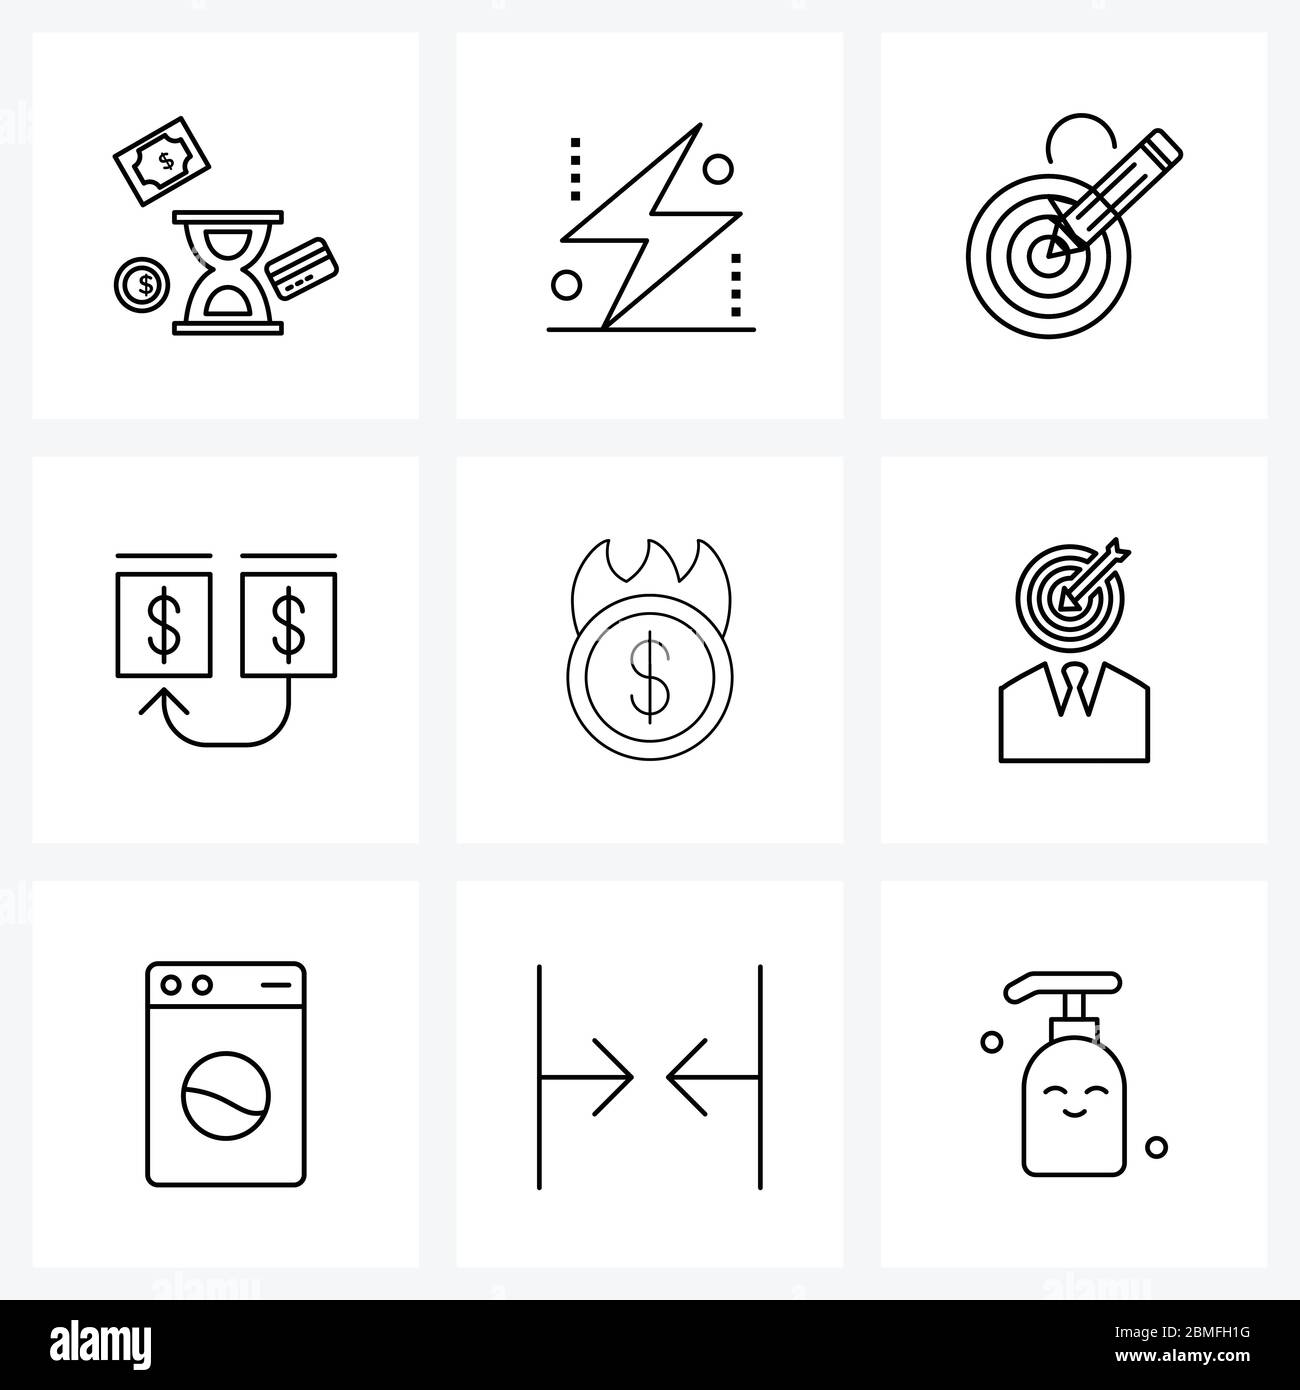 Universal Symbols Of 9 Modern Line Icons Of Finance Money Focus